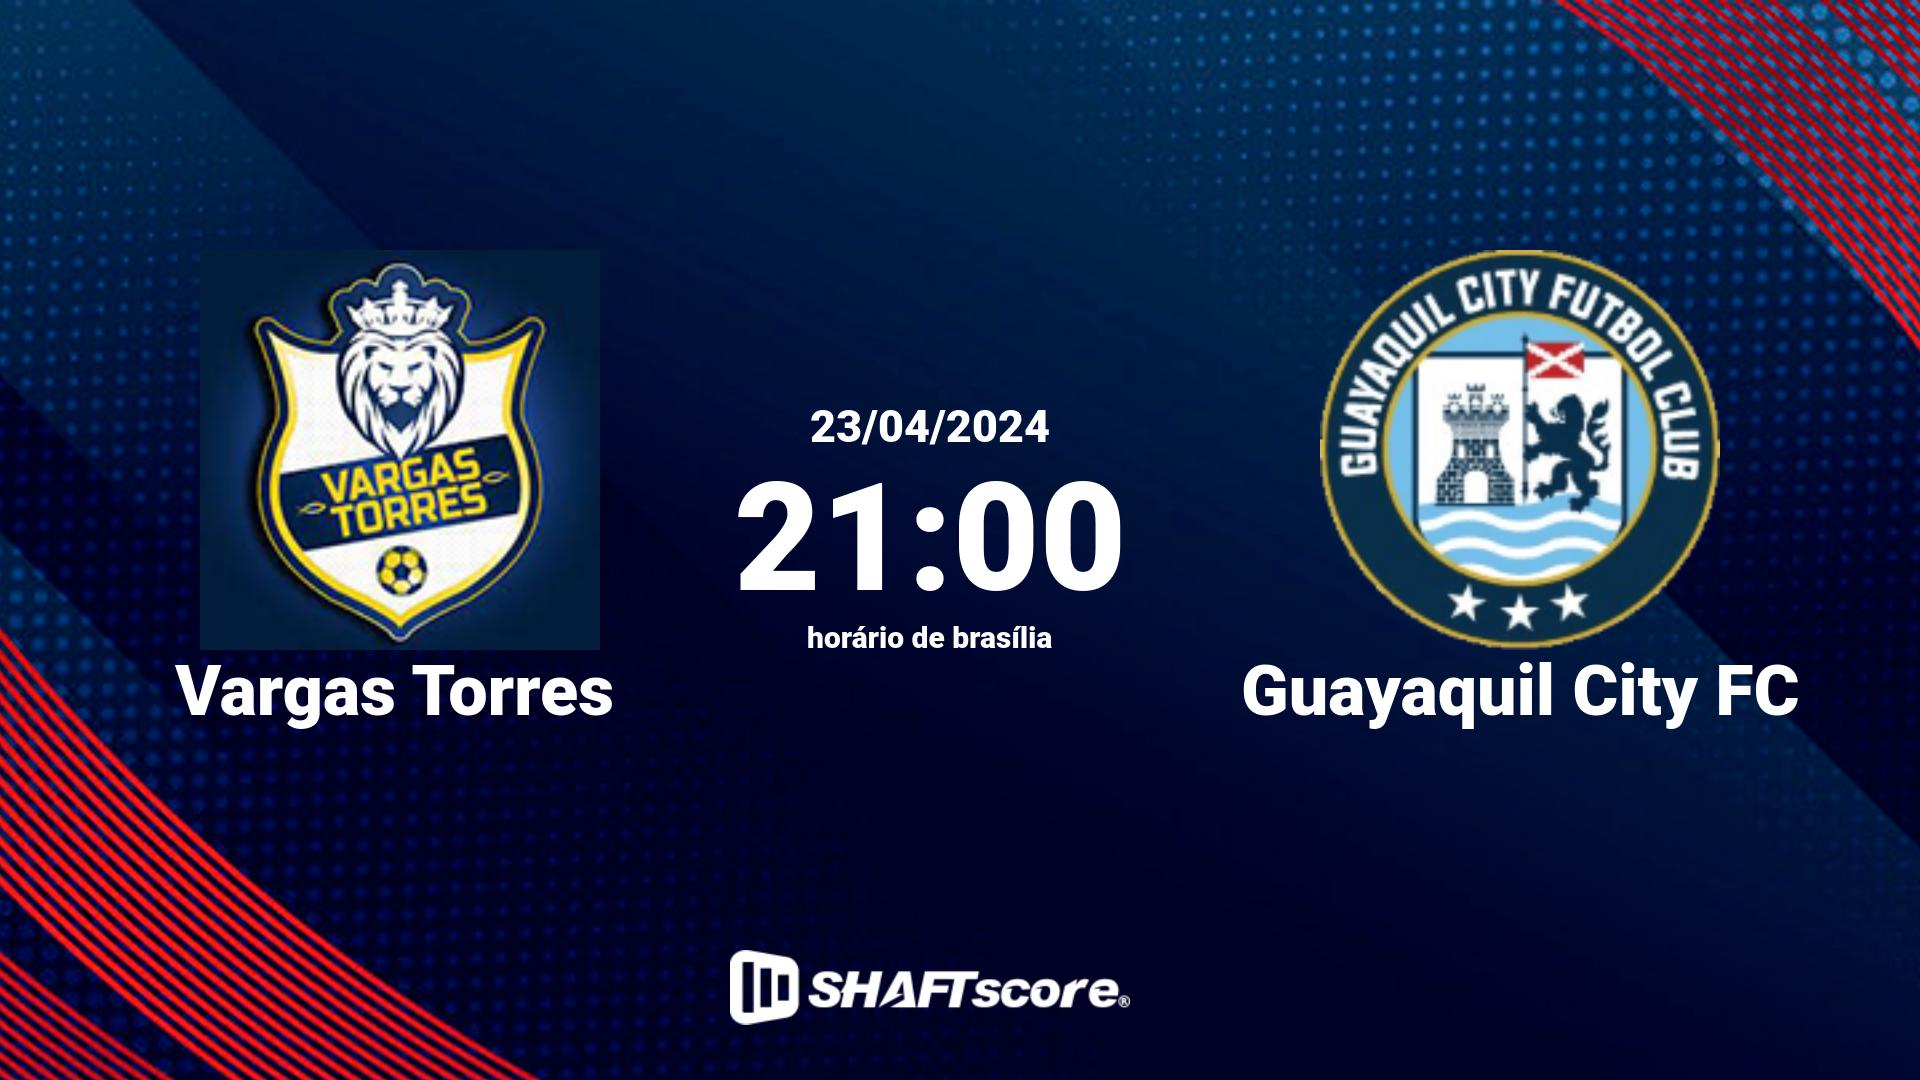 Estatísticas do jogo Vargas Torres vs Guayaquil City FC 23.04 21:00